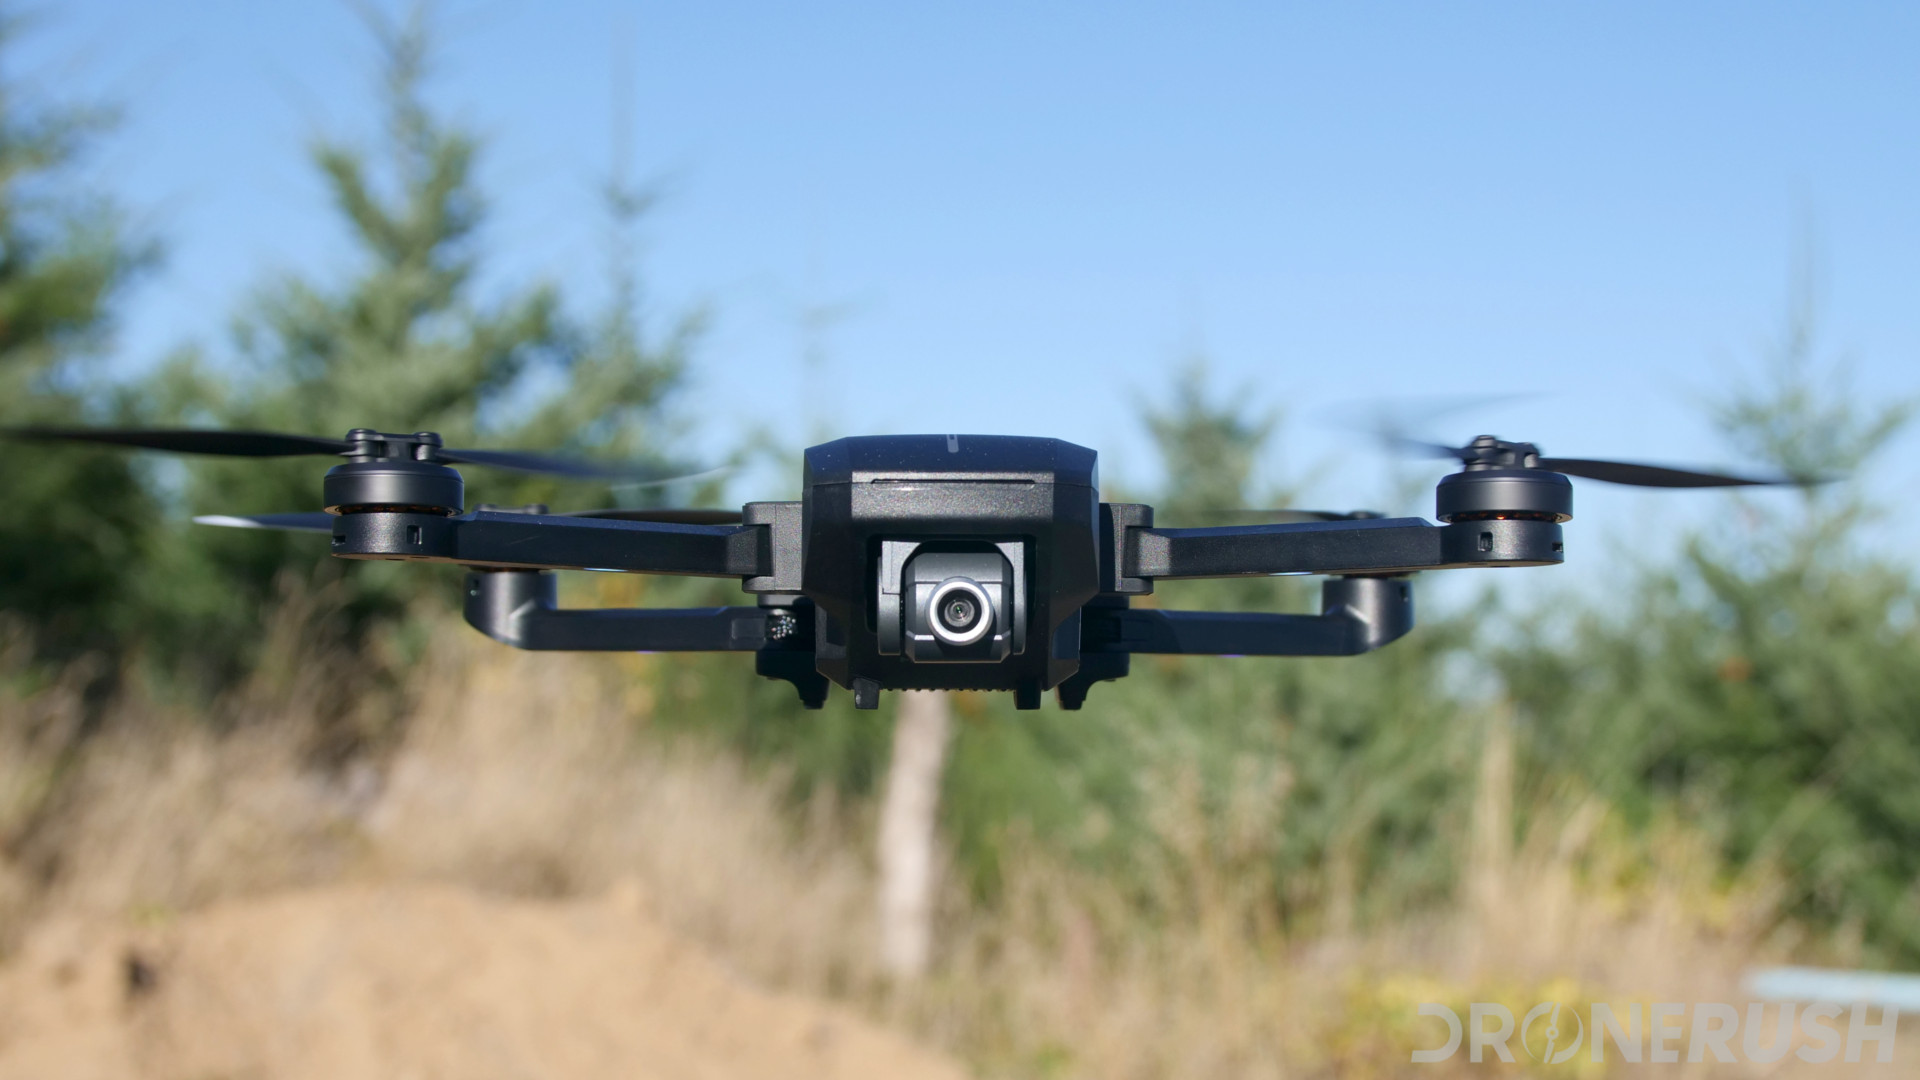 Yuneec Mantis Q Drohne Quadcopter Kameradrohne Faltdrohne only the drone 